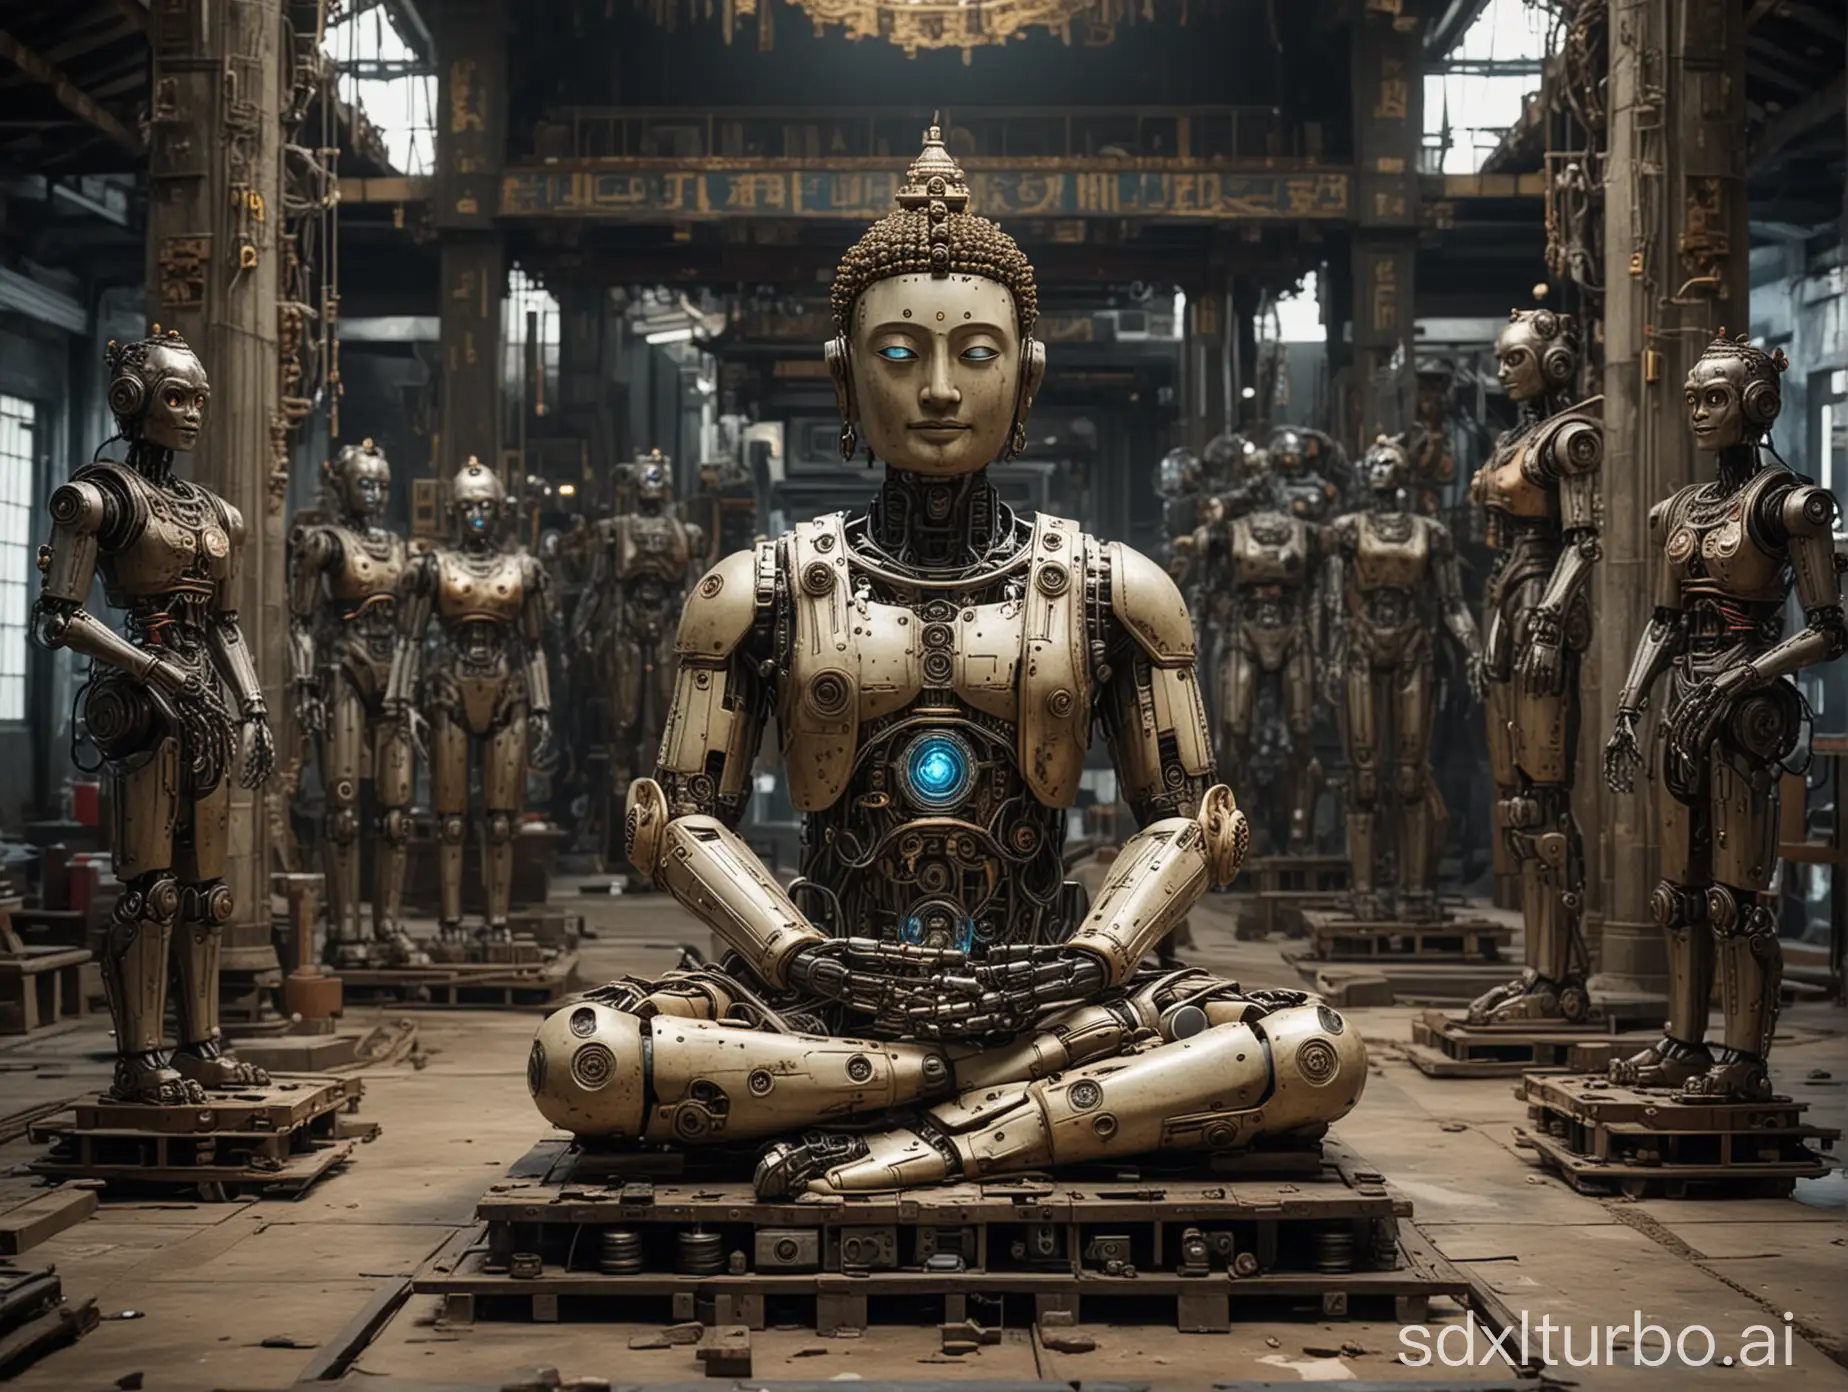 Cyberpke temple has robot Michael Buddha and mechanical gear